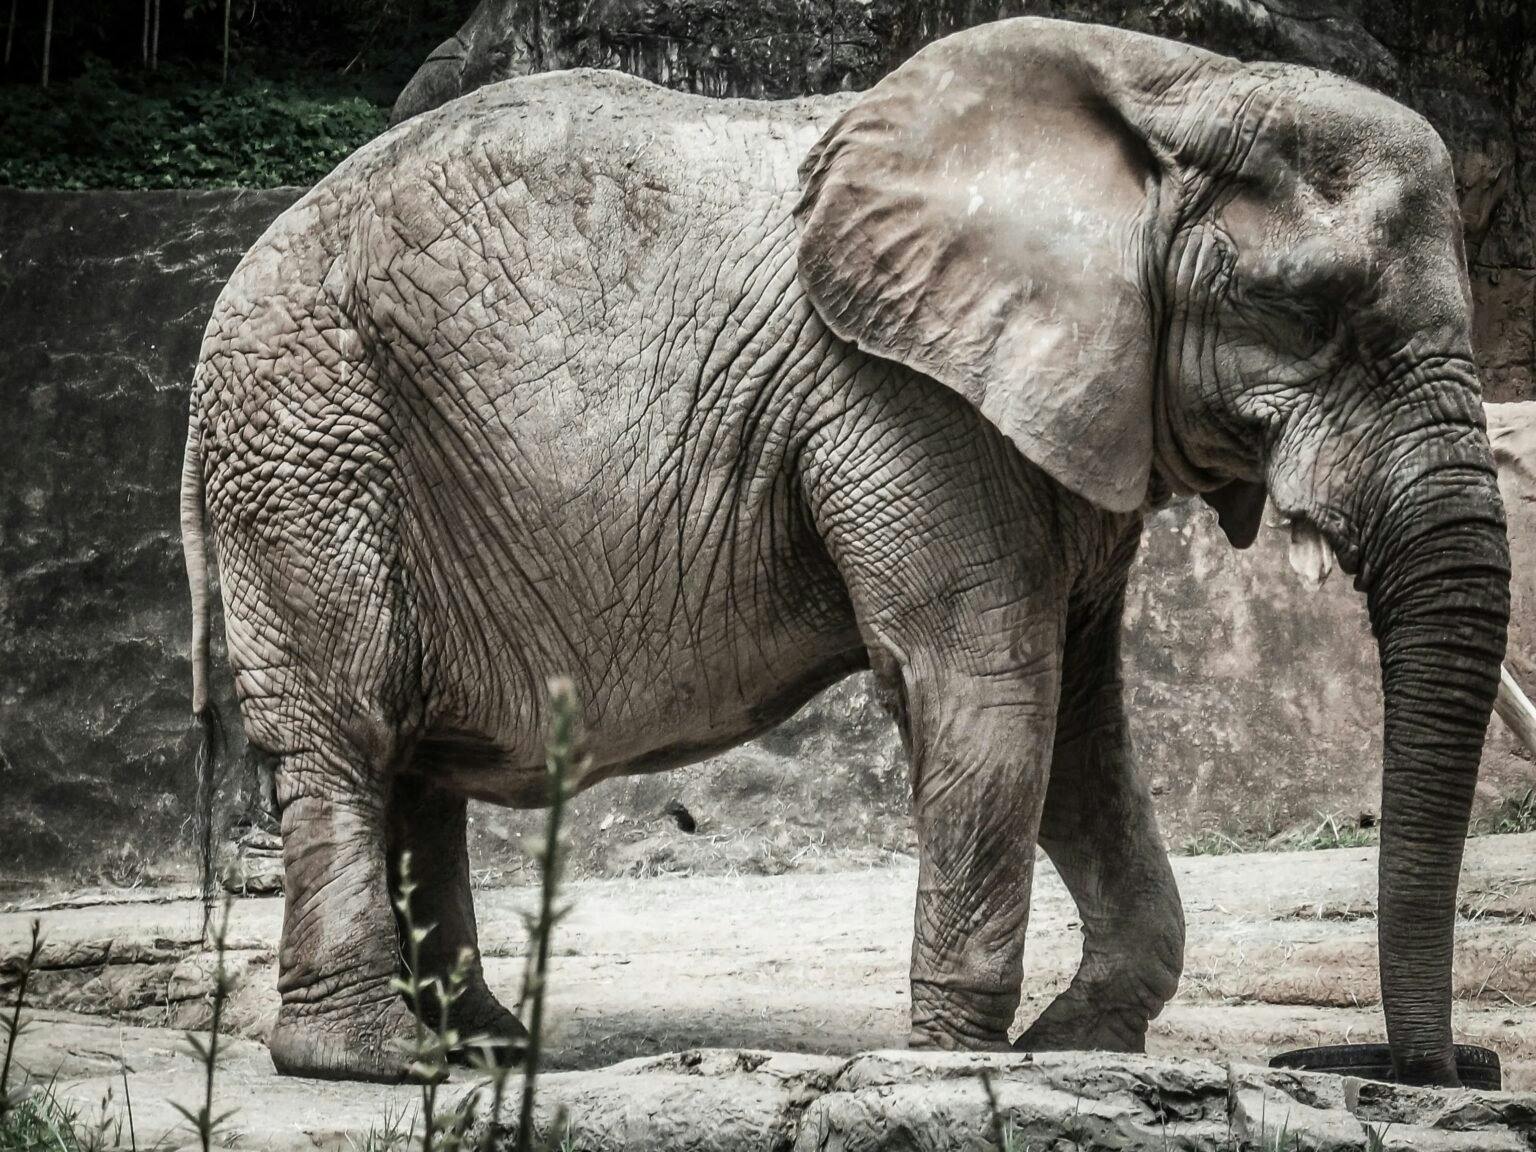 Elephant standing on dirt.